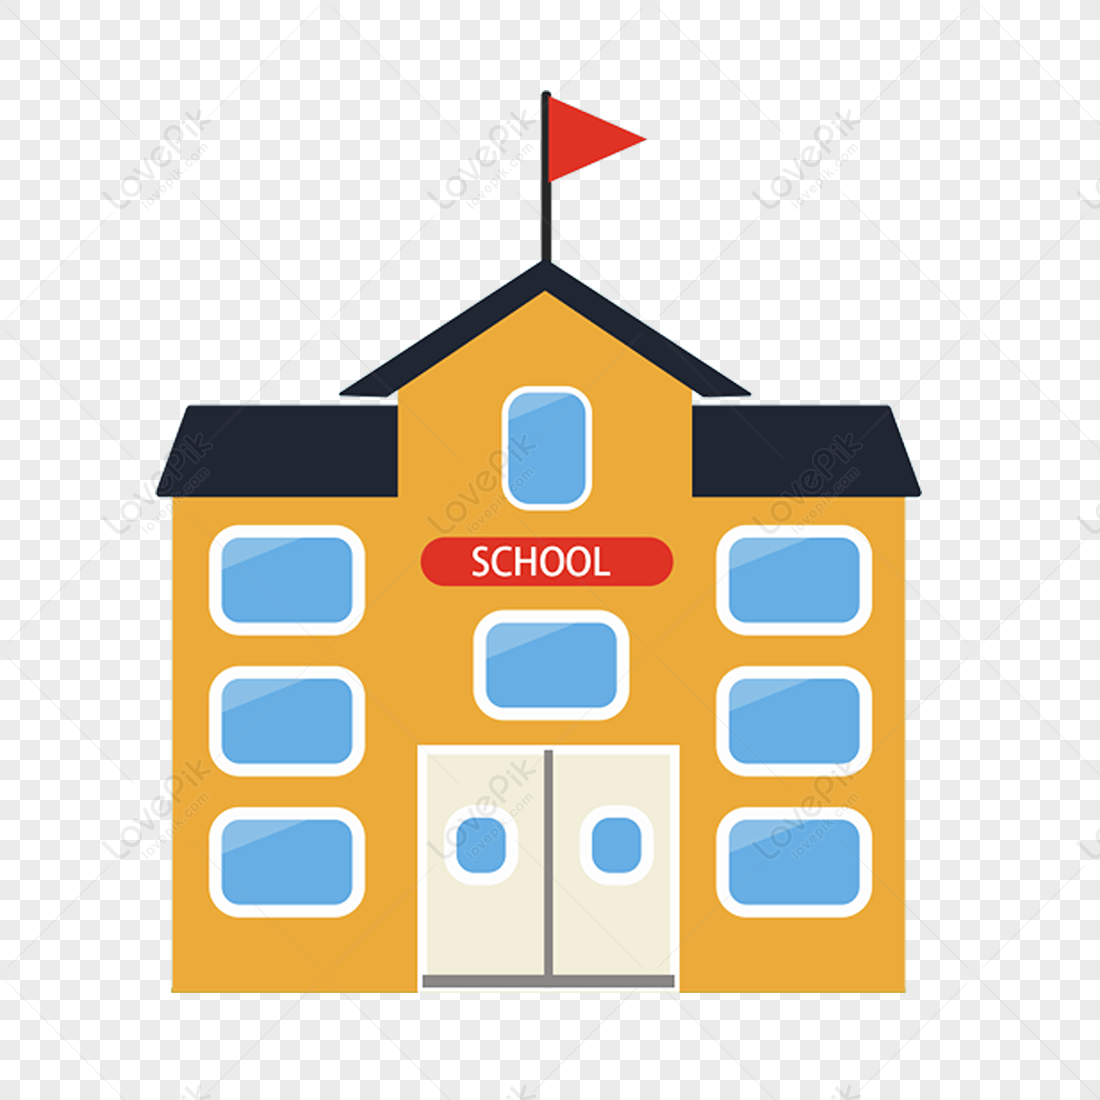 School, material, school materials, schools icon png transparent image